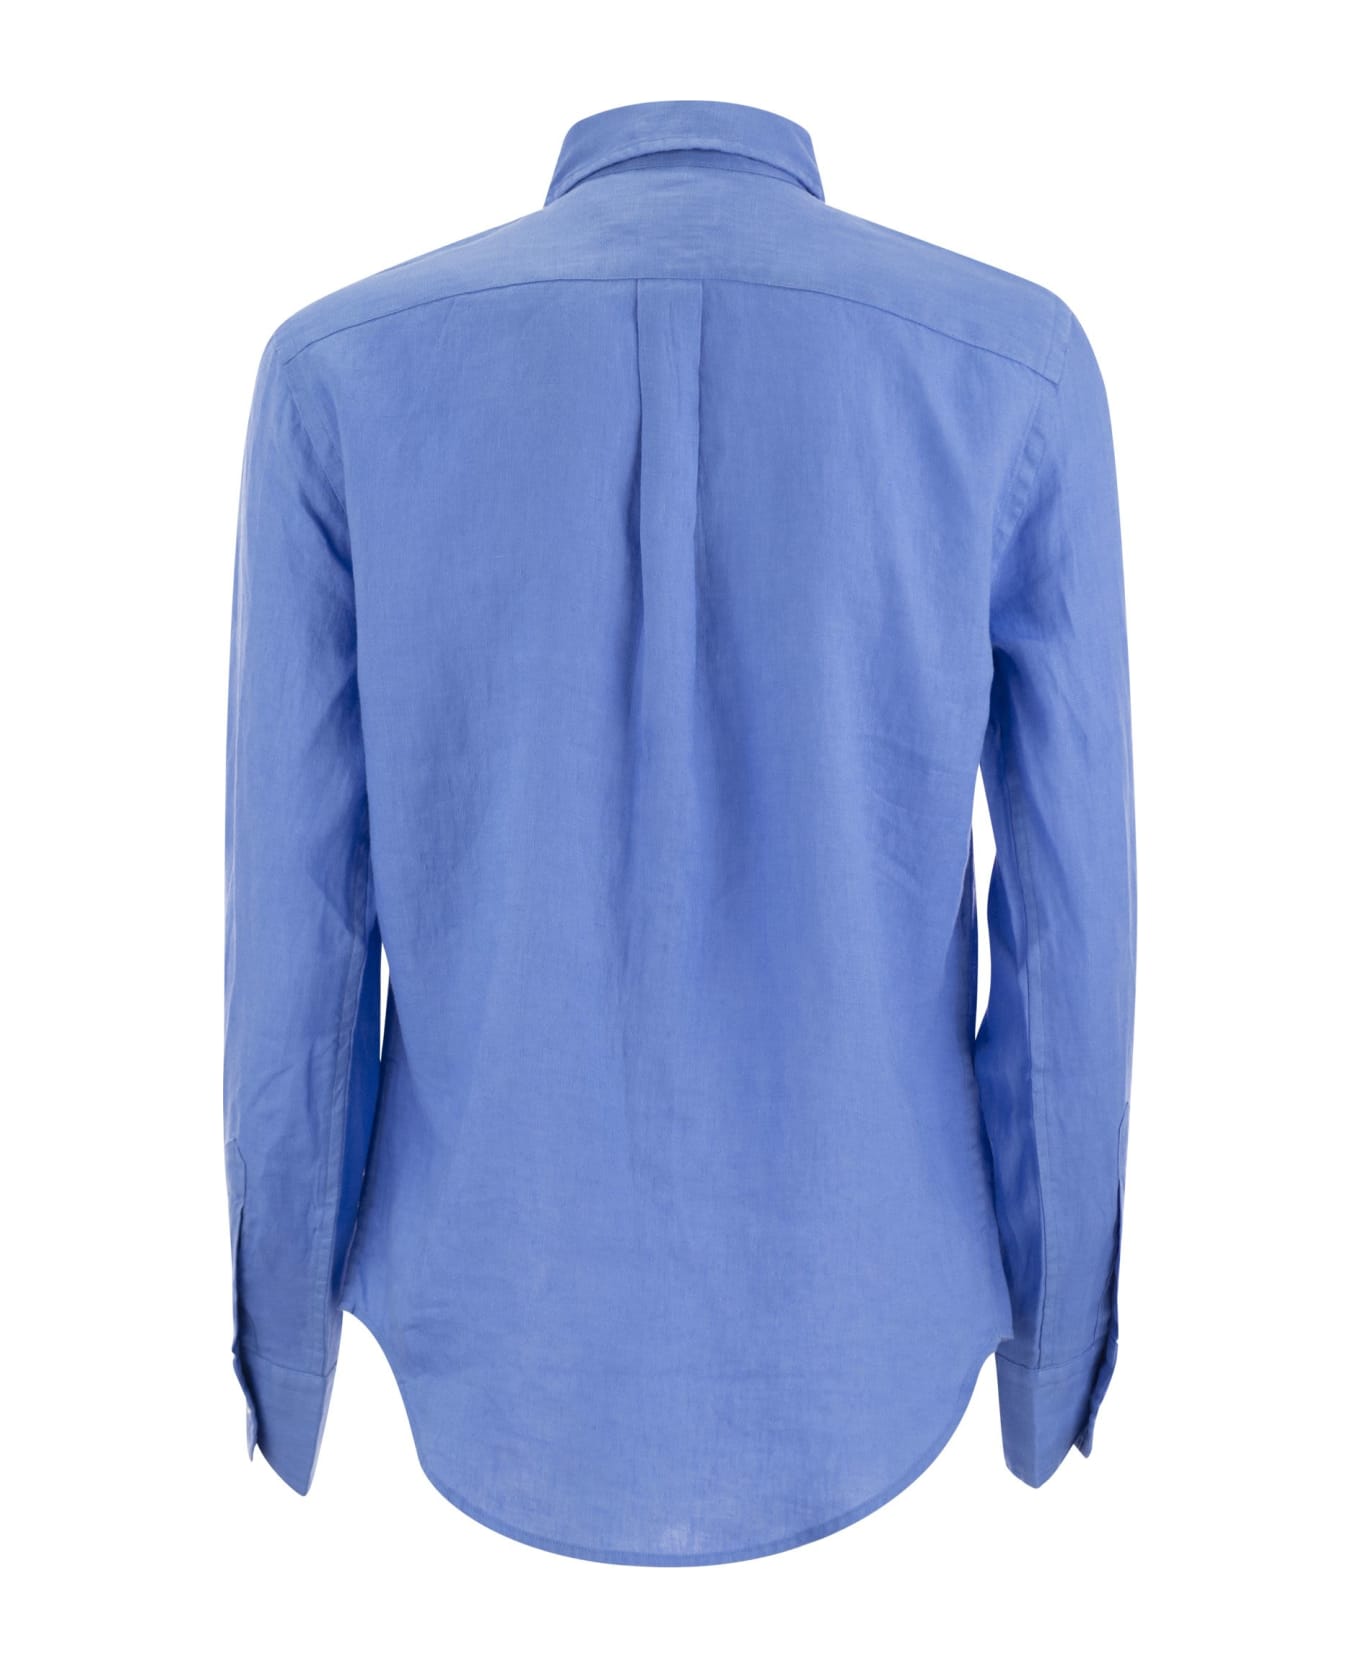 Polo Ralph Lauren Shirt With Pony - Light Blue